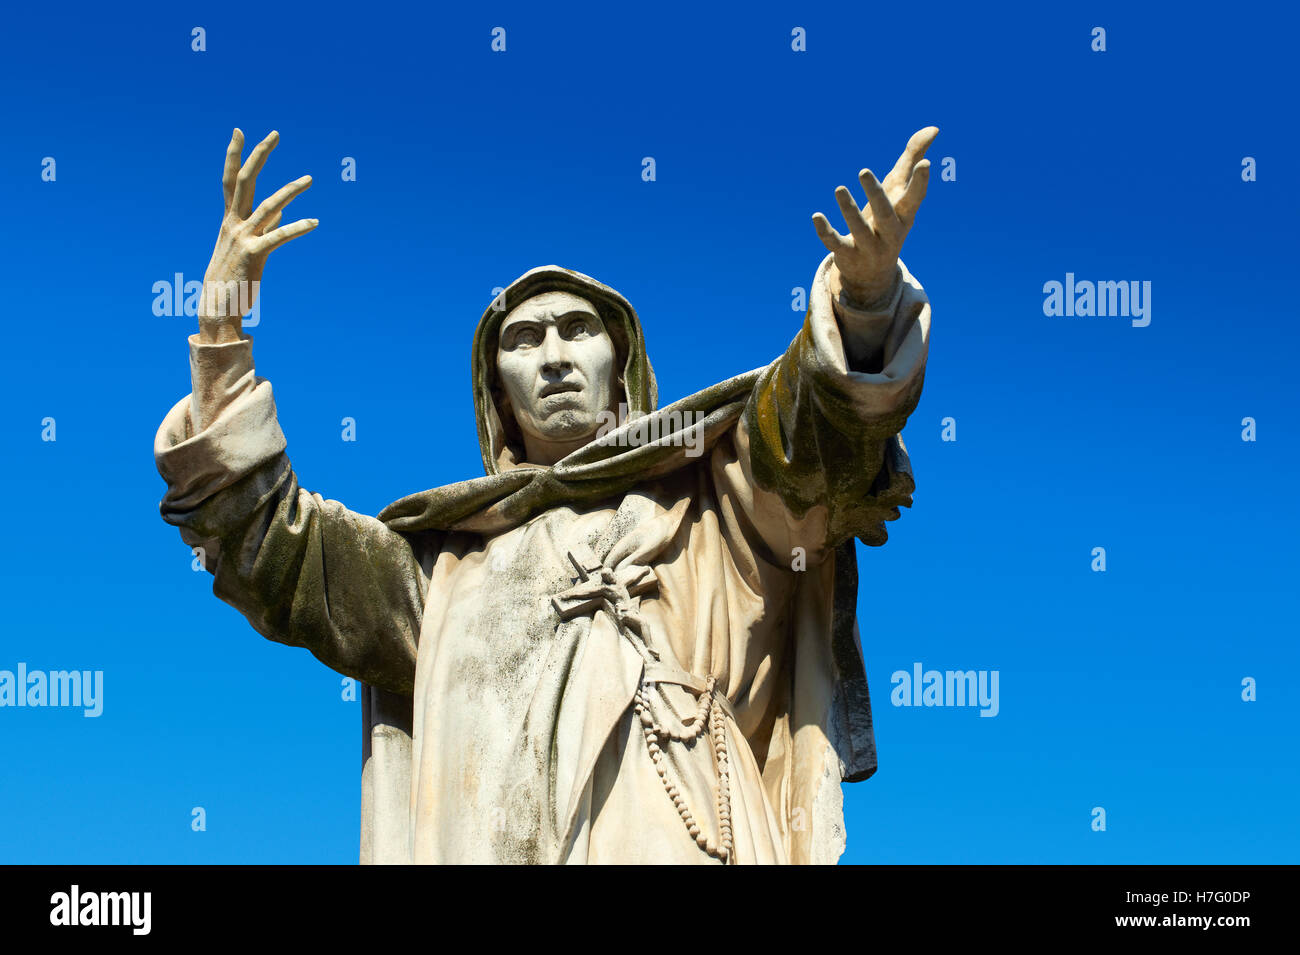 Statue of Savonarola Statue, Ferrara, Italy Stock Photo